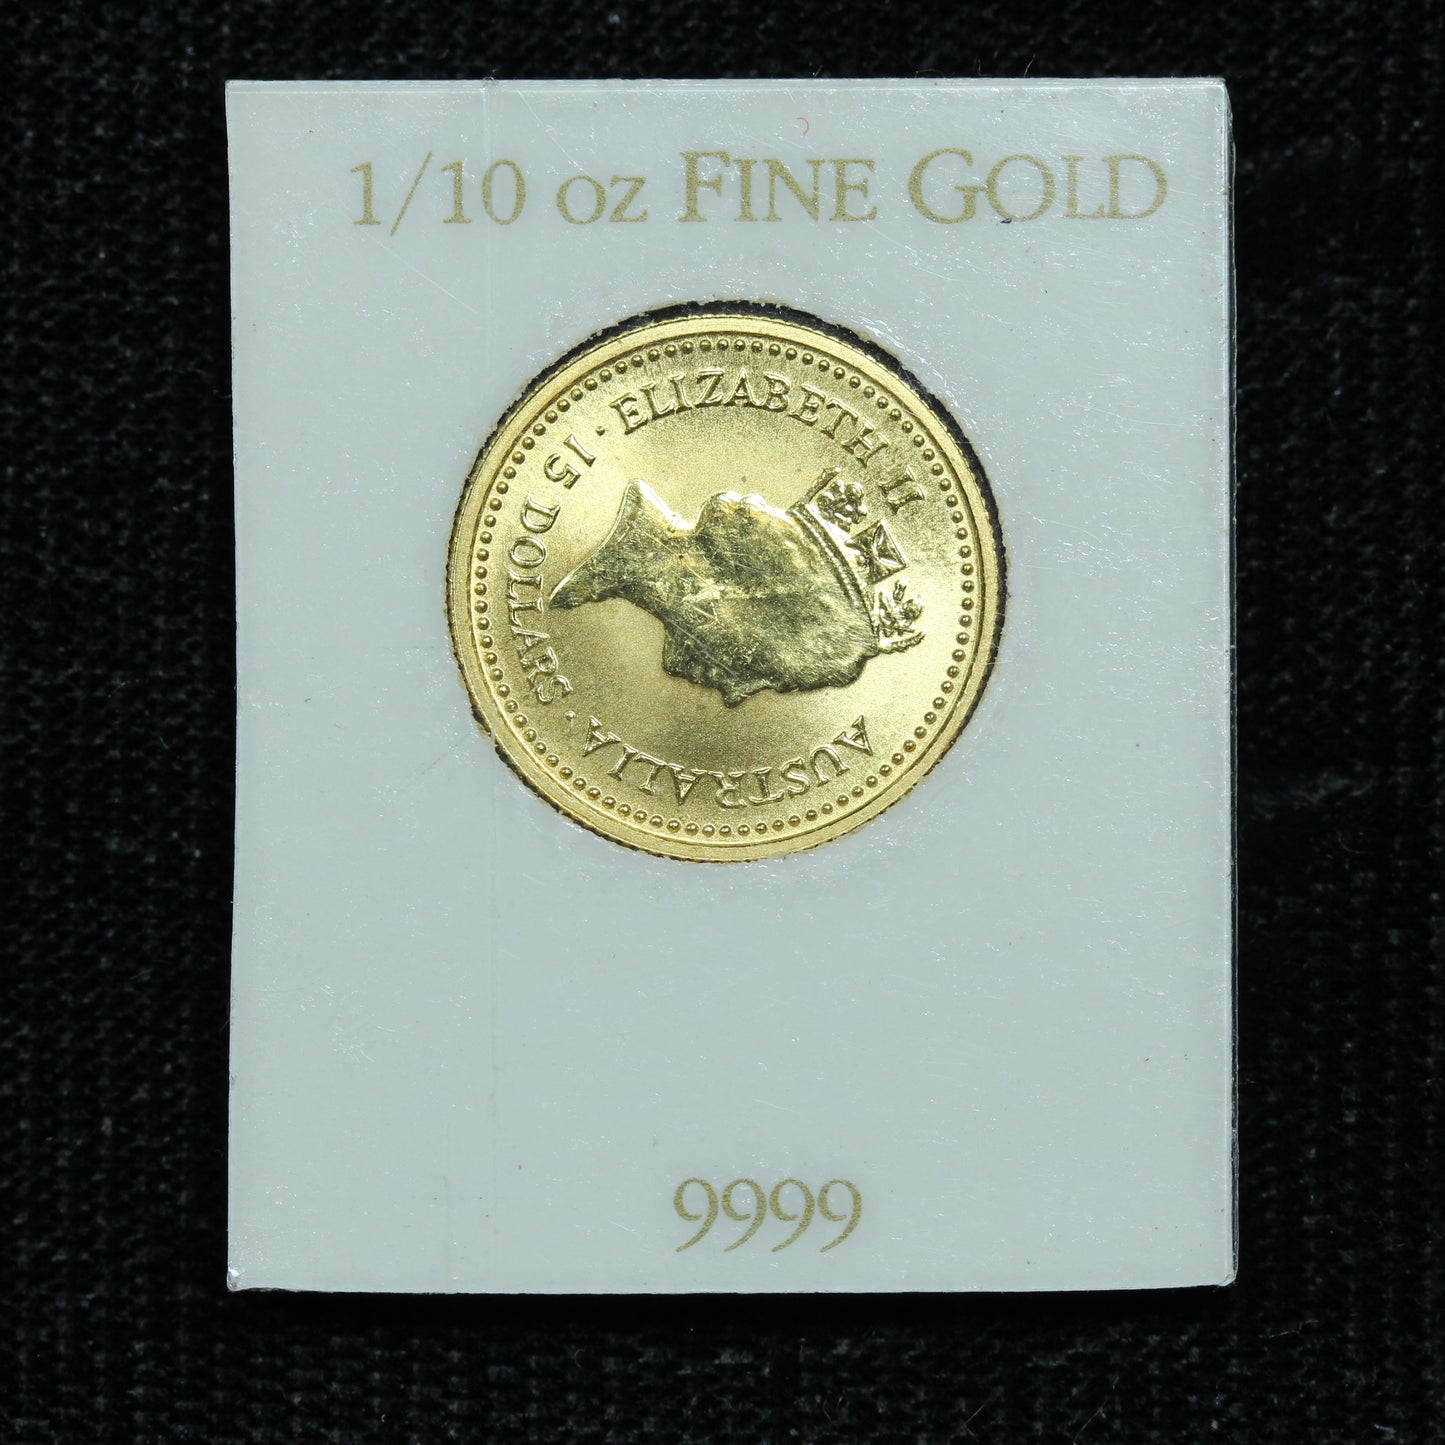 1987 1/10 oz Gold Australia Coin $15 - Nugget - Little Hero - Sealed